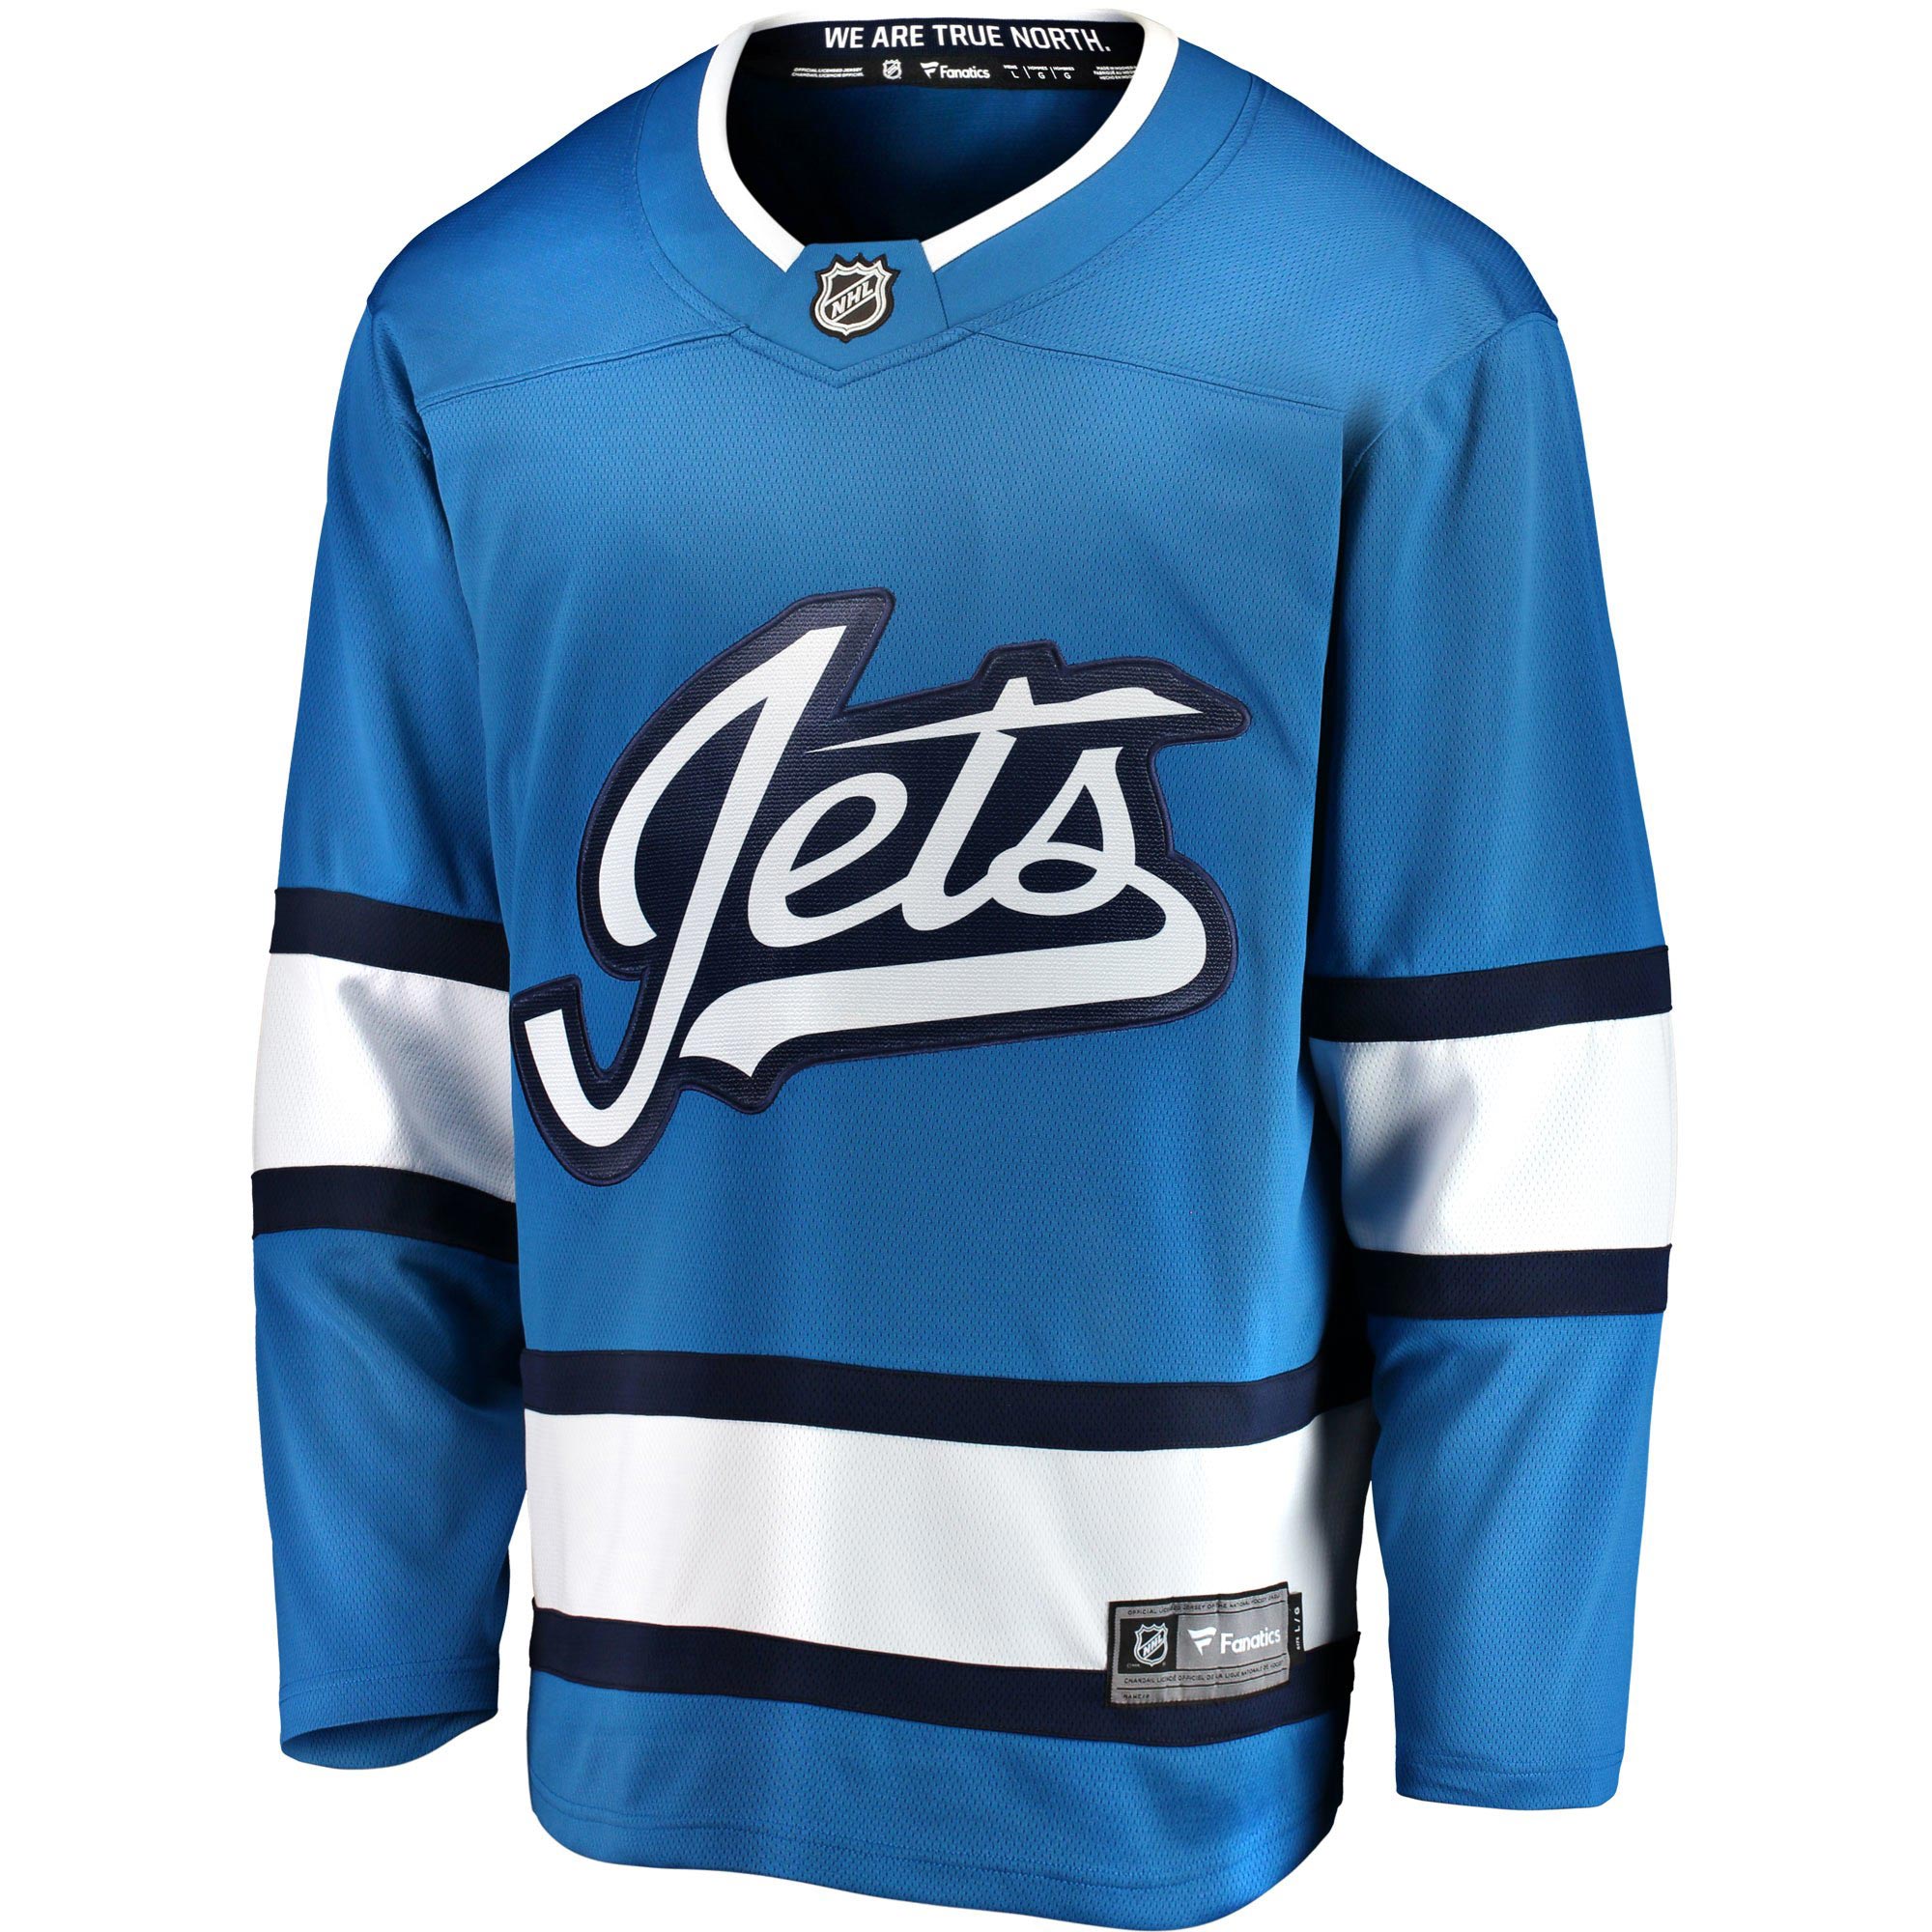 Winnipeg Jets unveil jersey in aviator blue, with new script logo